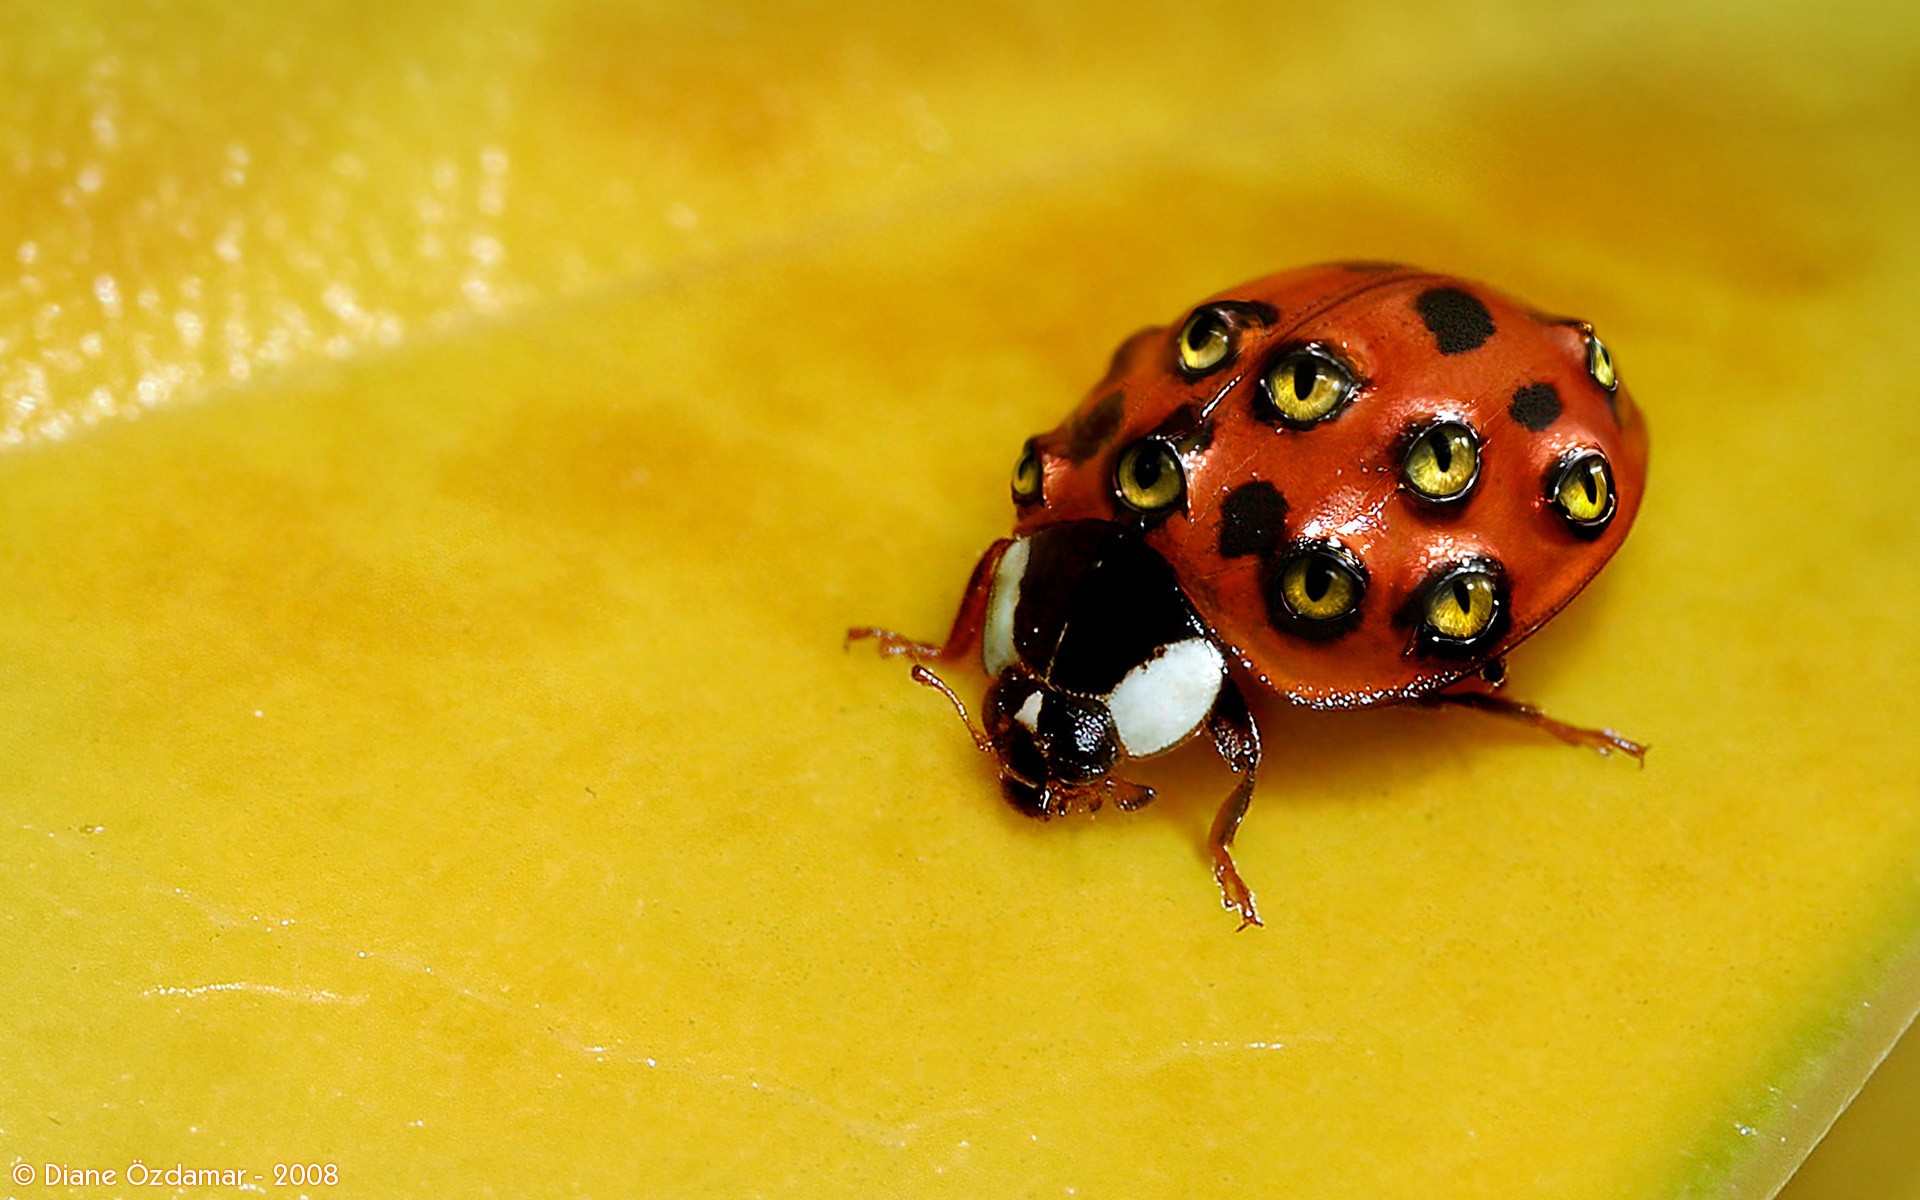 Weird Ladybug With Eyes by Diane Özdamar